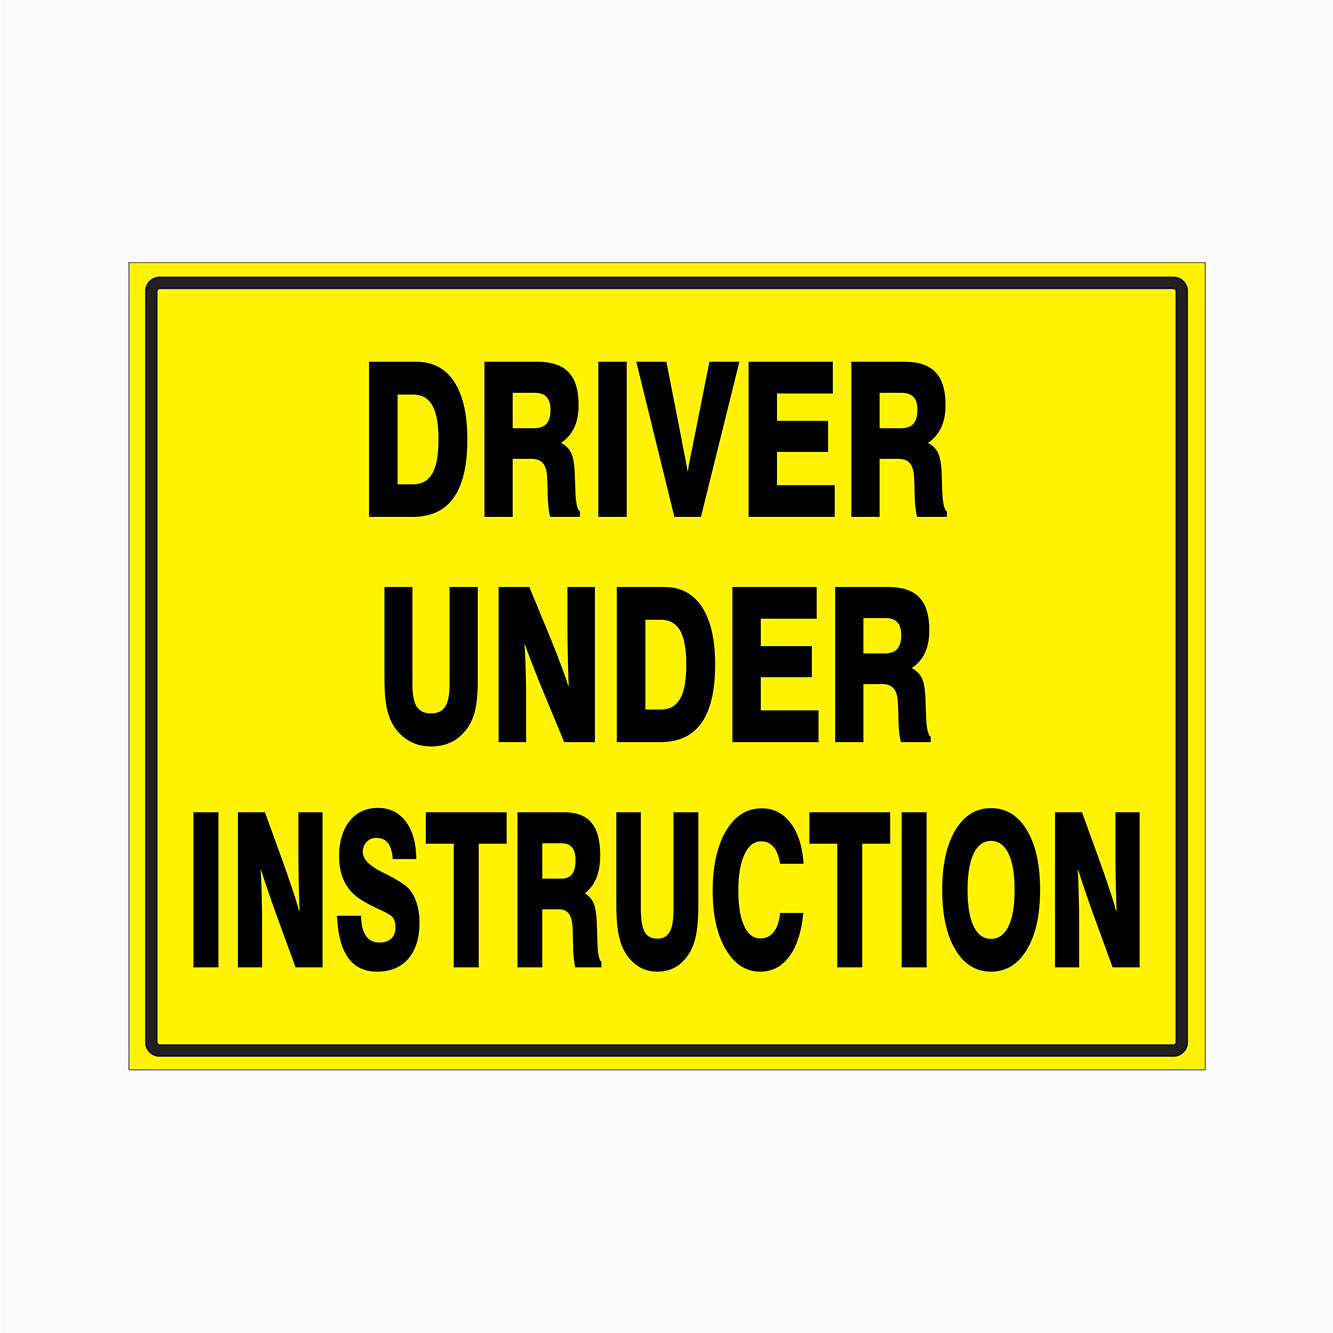 DRIVER UNDER INSTRUCTION SIGN